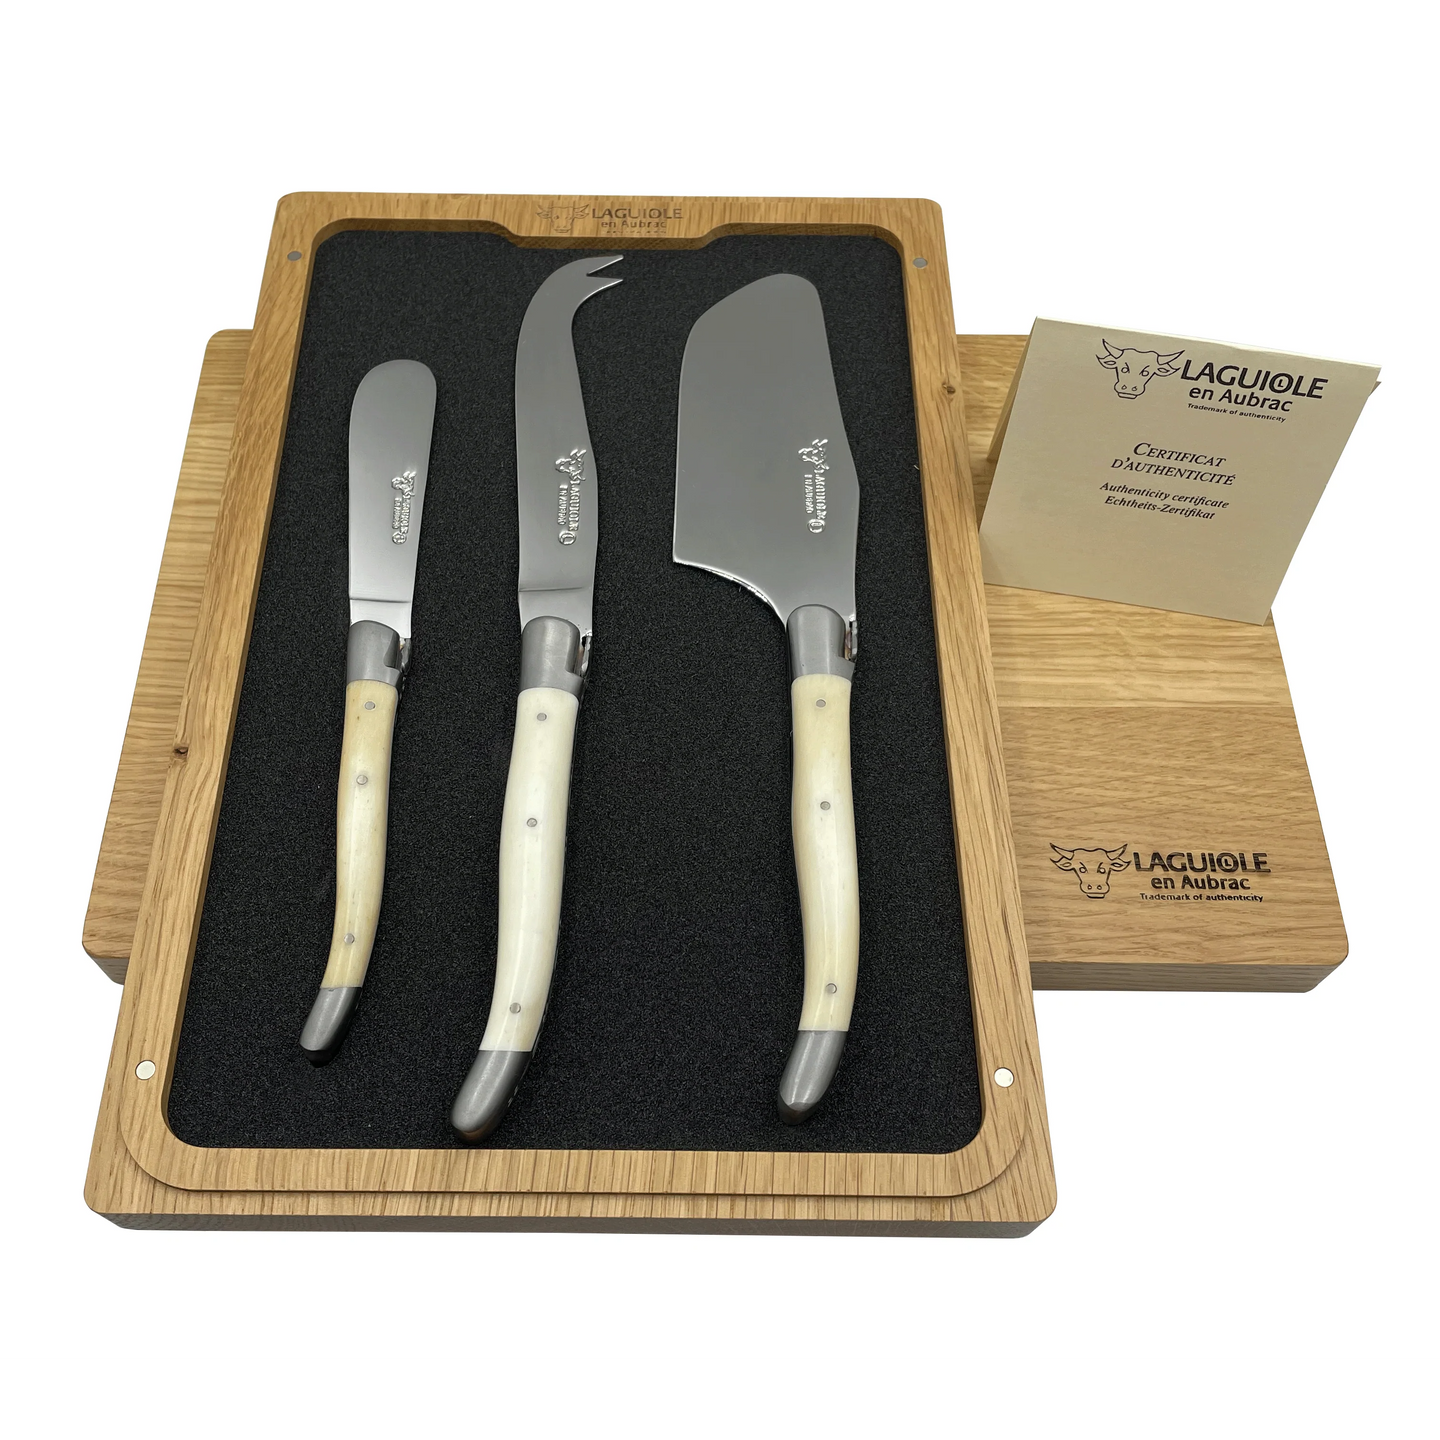 Laguiole en Aubrac Handcrafted 3-Piece Cheese Knife Set with Bone Handles